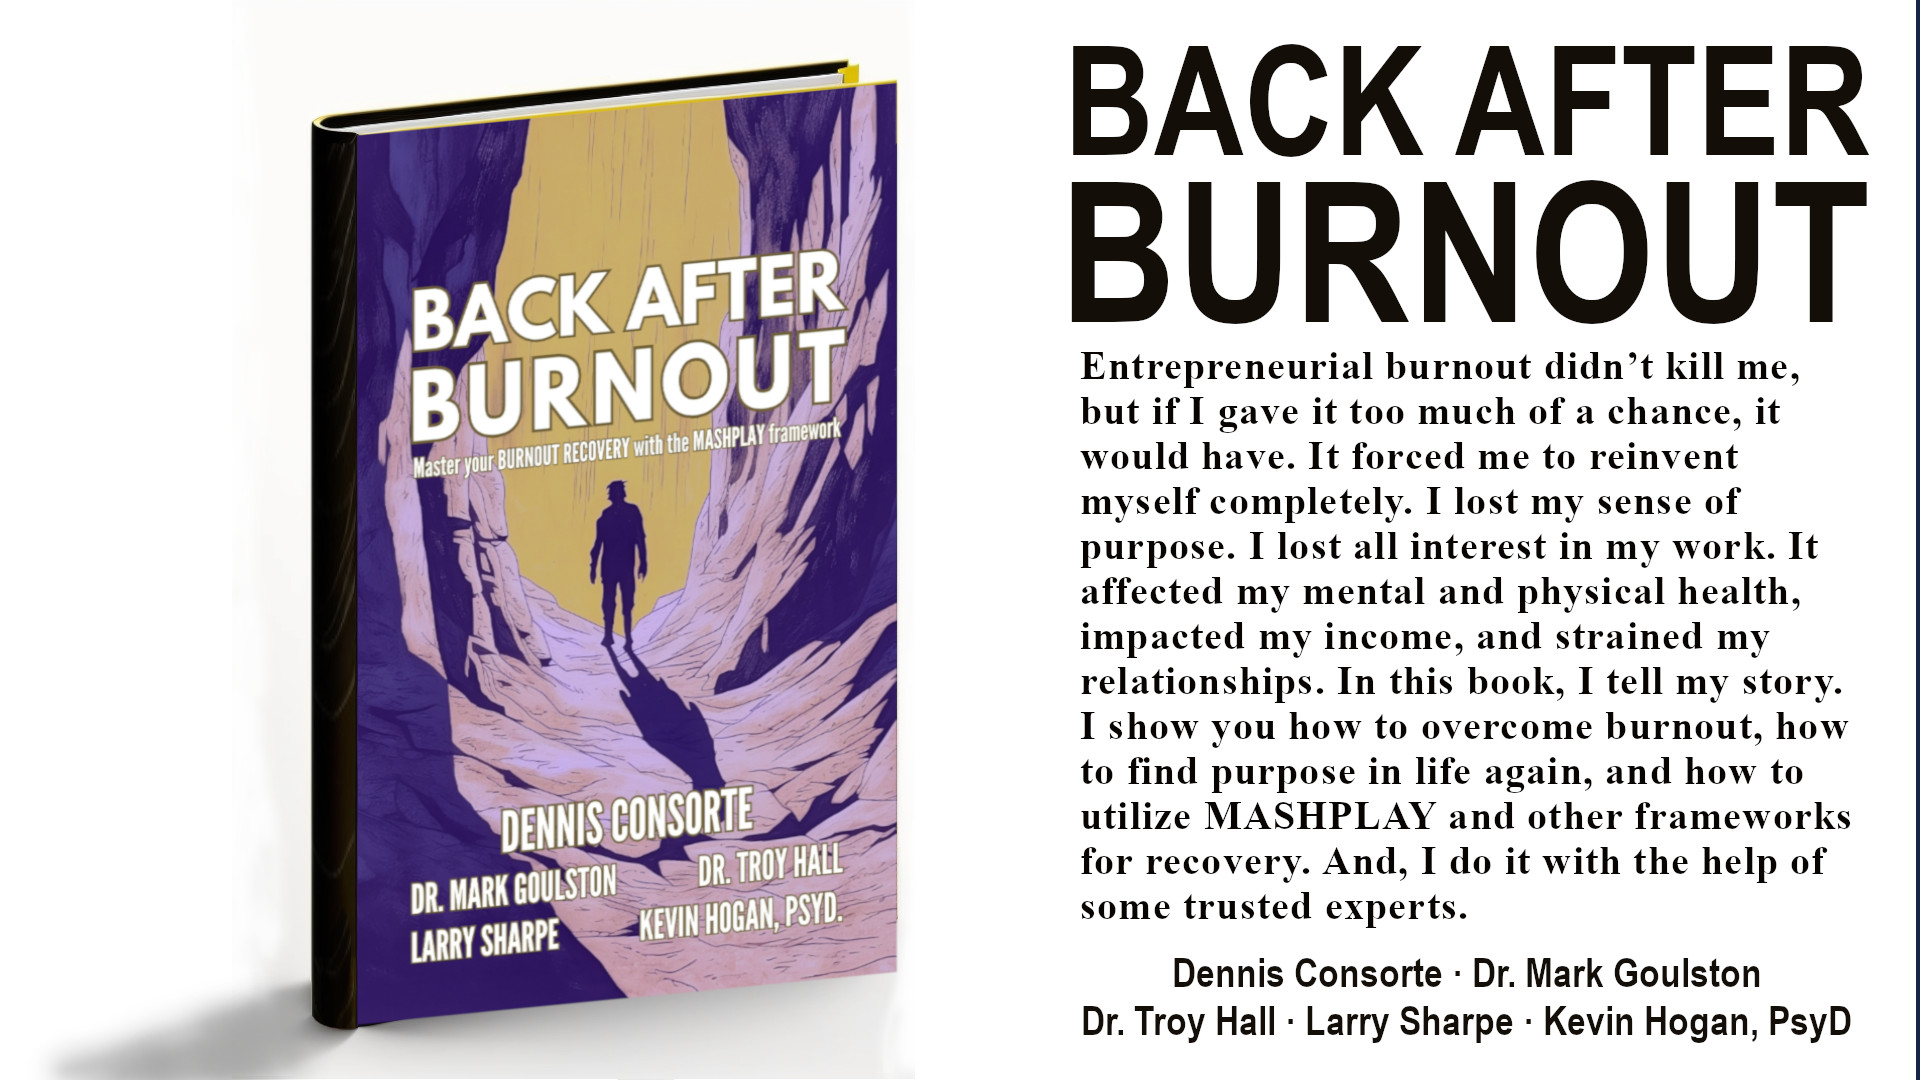 Back After Burnout book and description